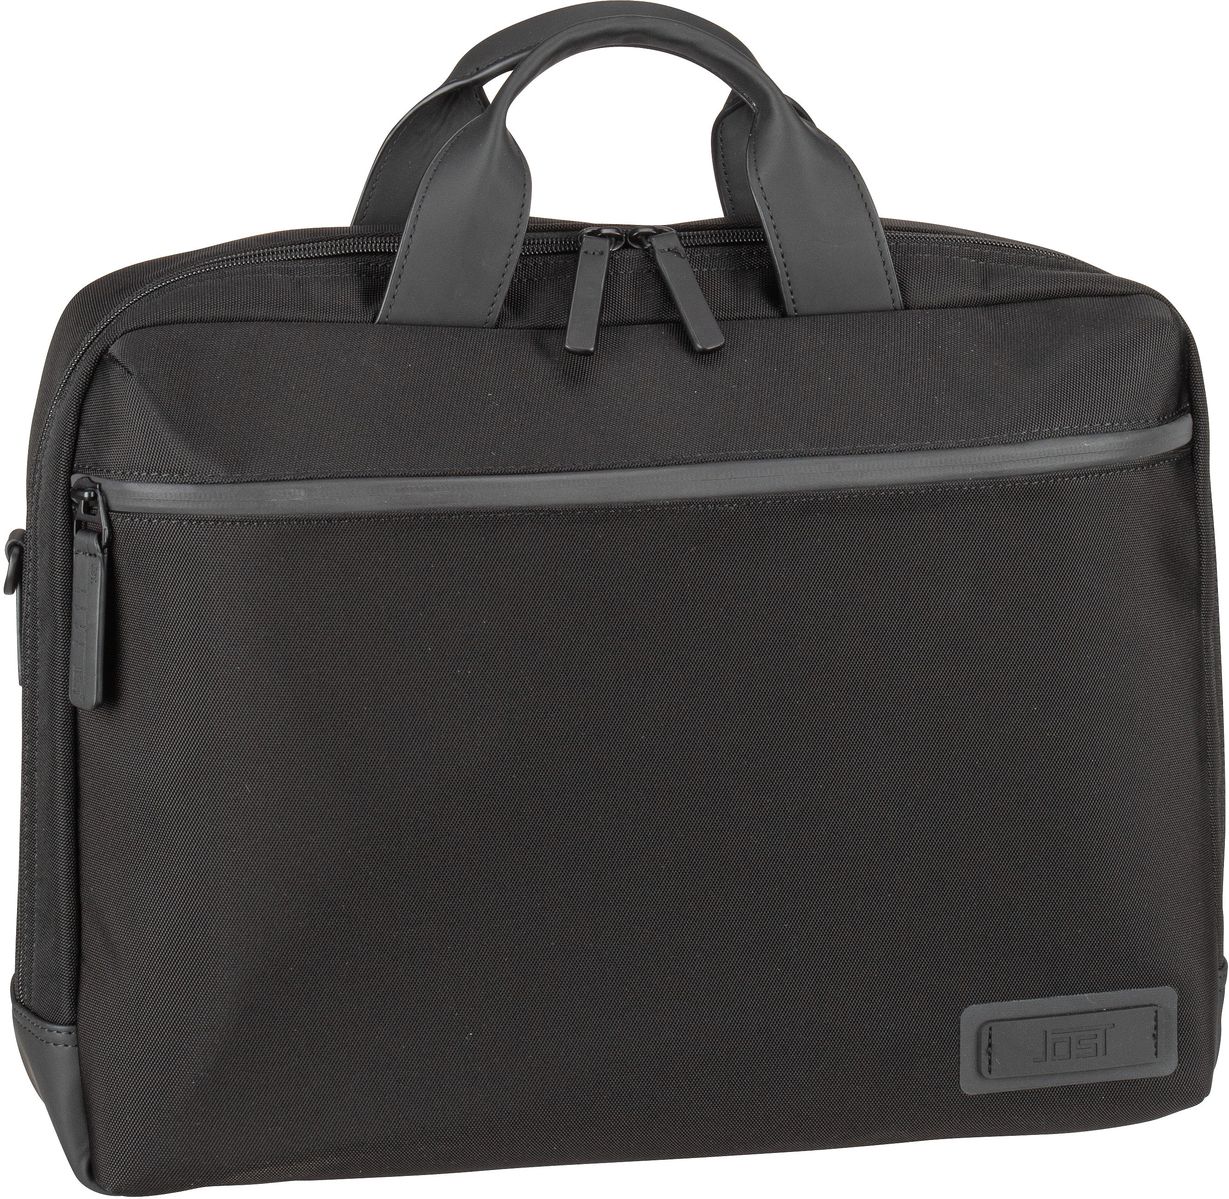 Jost Tallinn Business Bag 1 Comp - Black